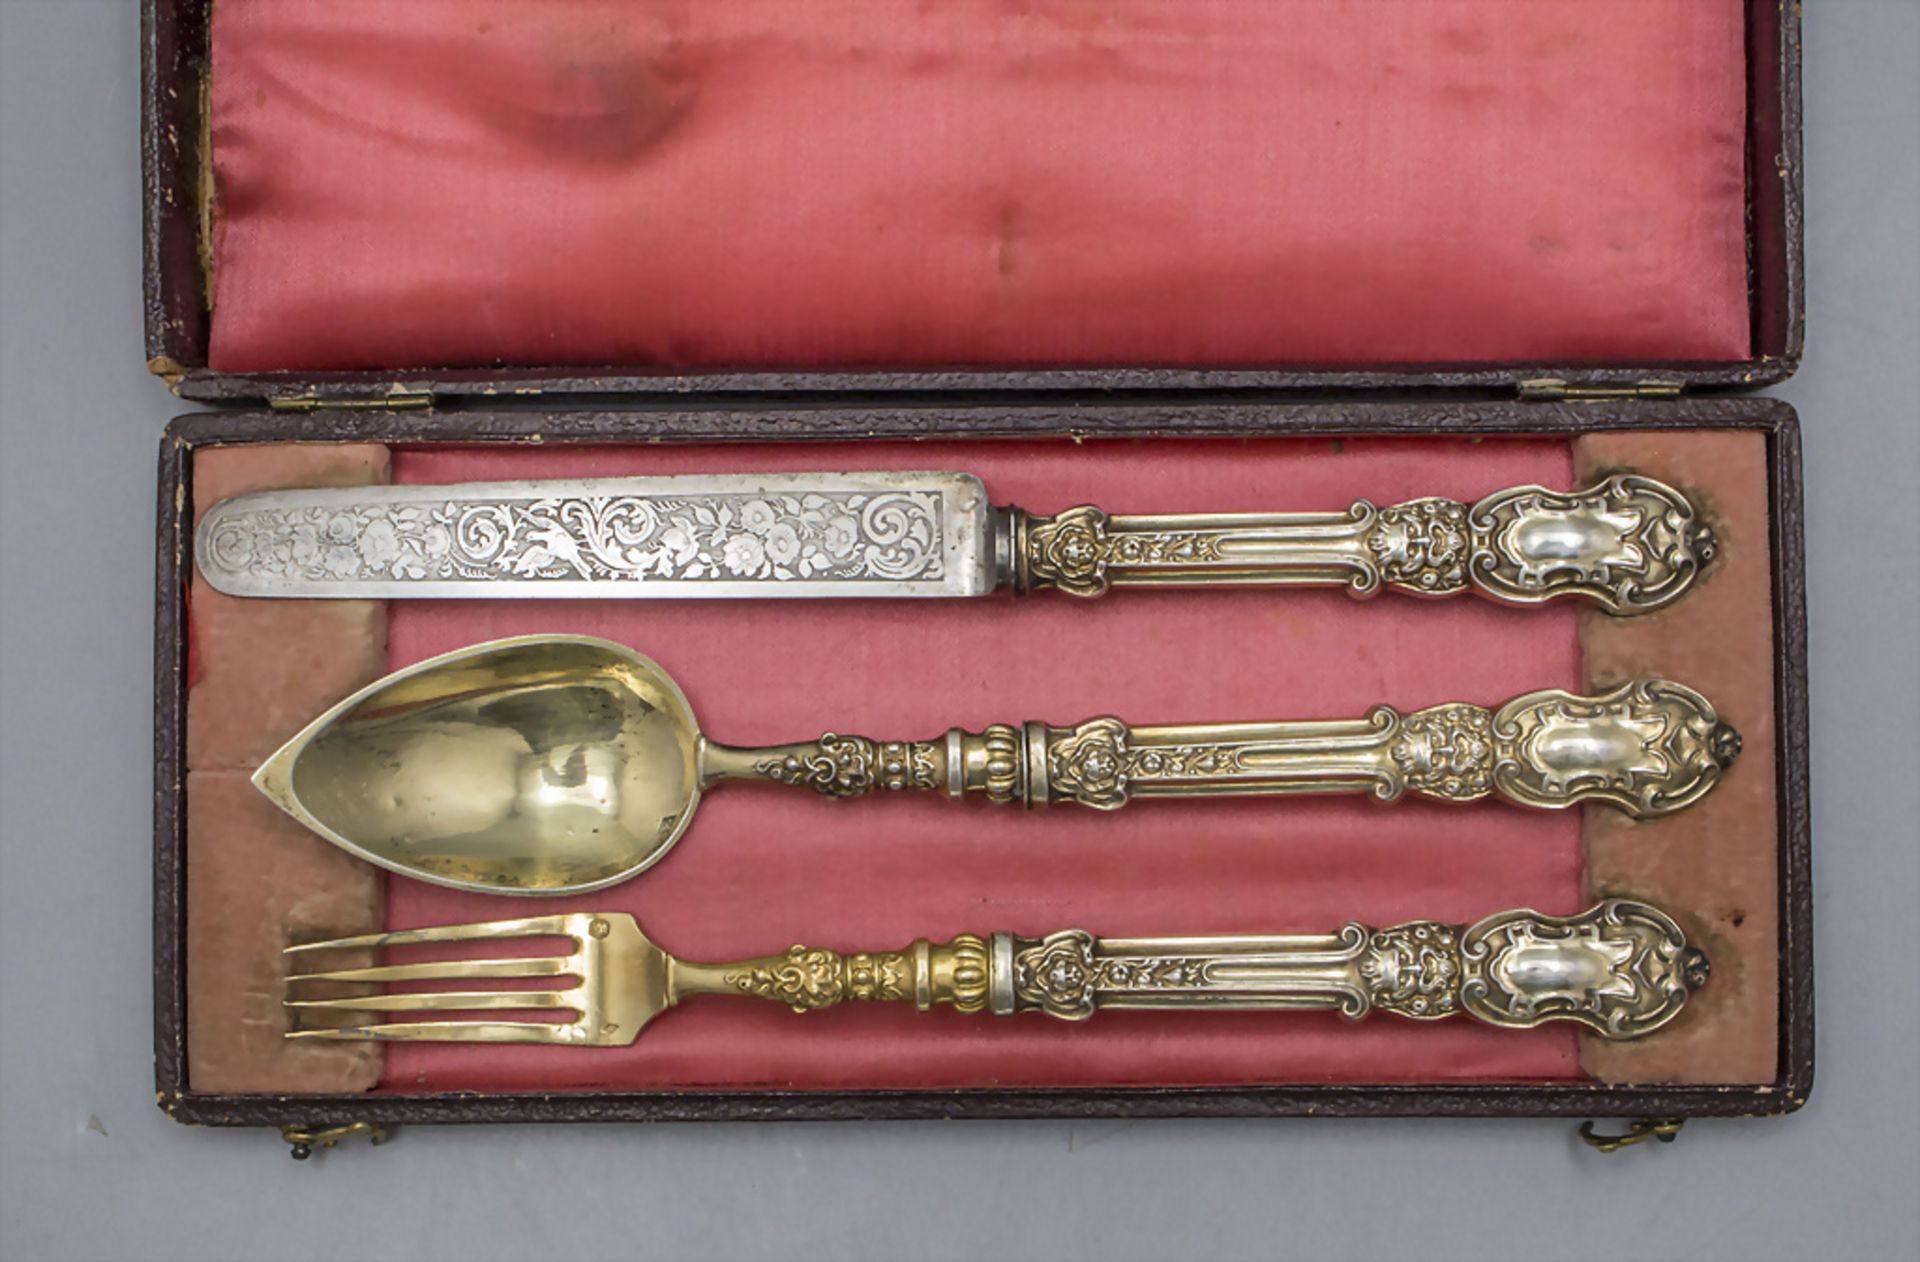 3 Teile Besteck im Etui / 3 pieces of silver cutlery in a box, Joseph Henry, Paris, 1841-1846 - Bild 2 aus 5